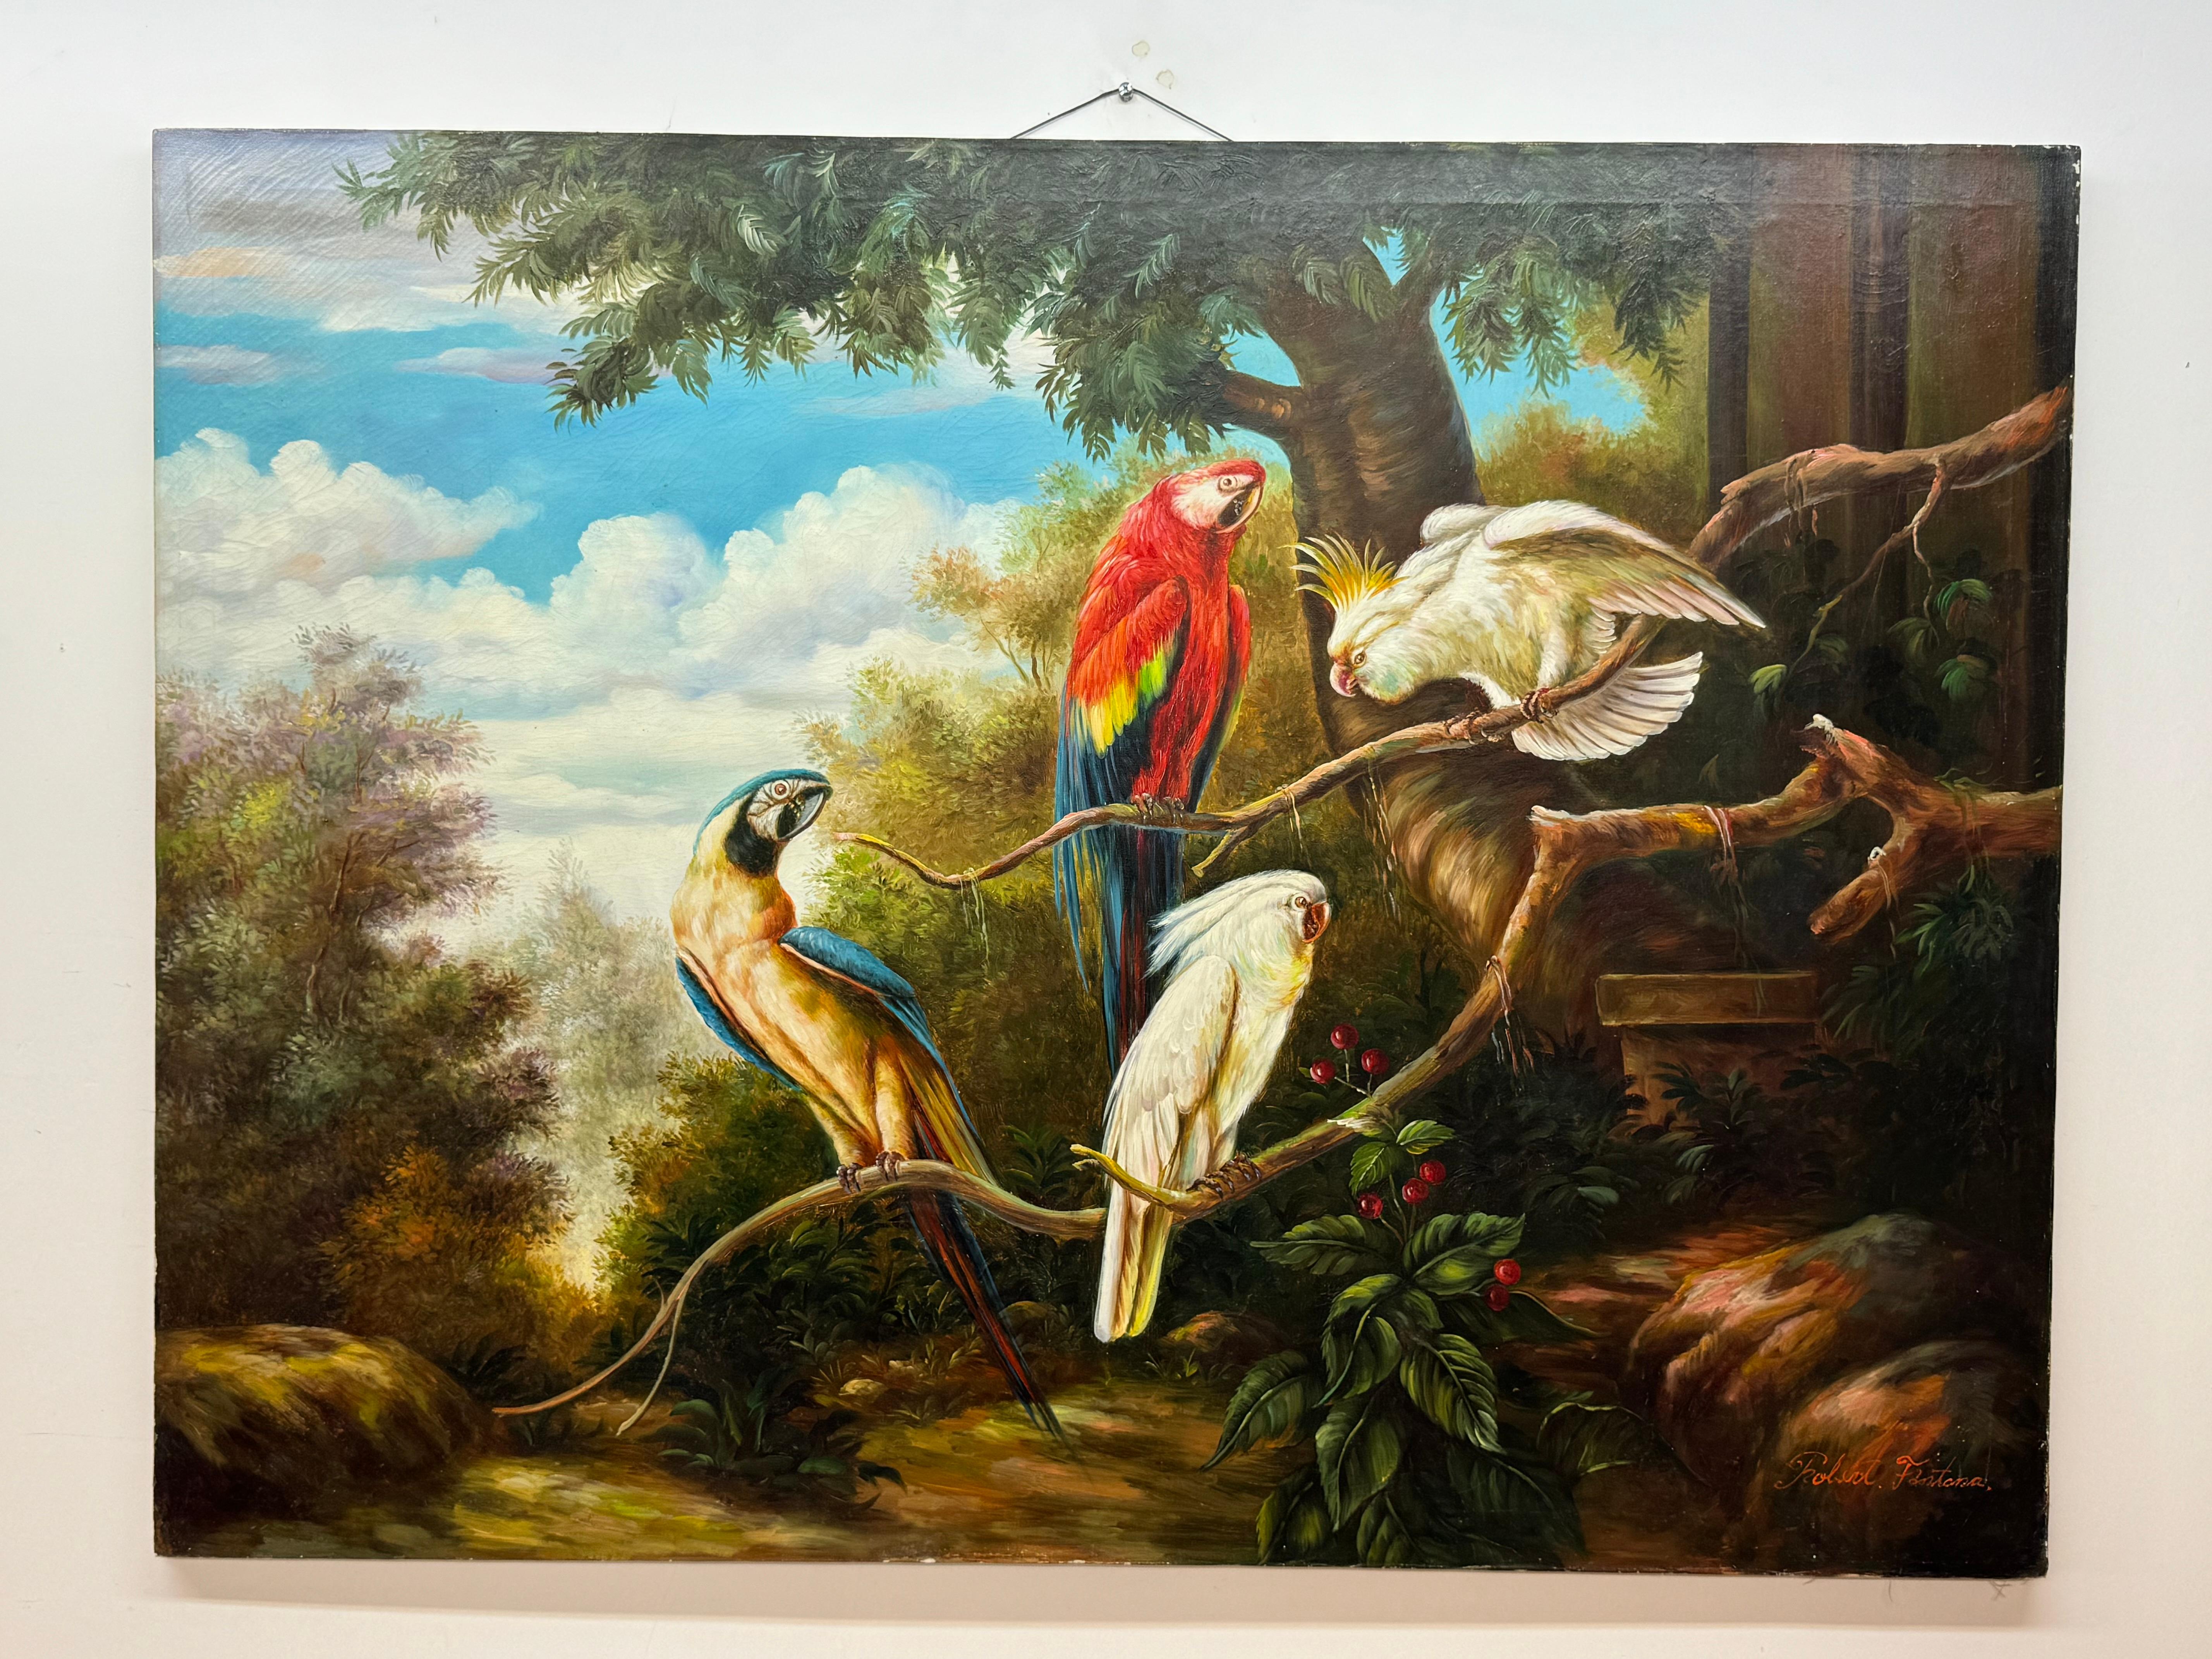 Robert Fontana 

Paysage topique avec quatre perroquets 

Huile sur toile